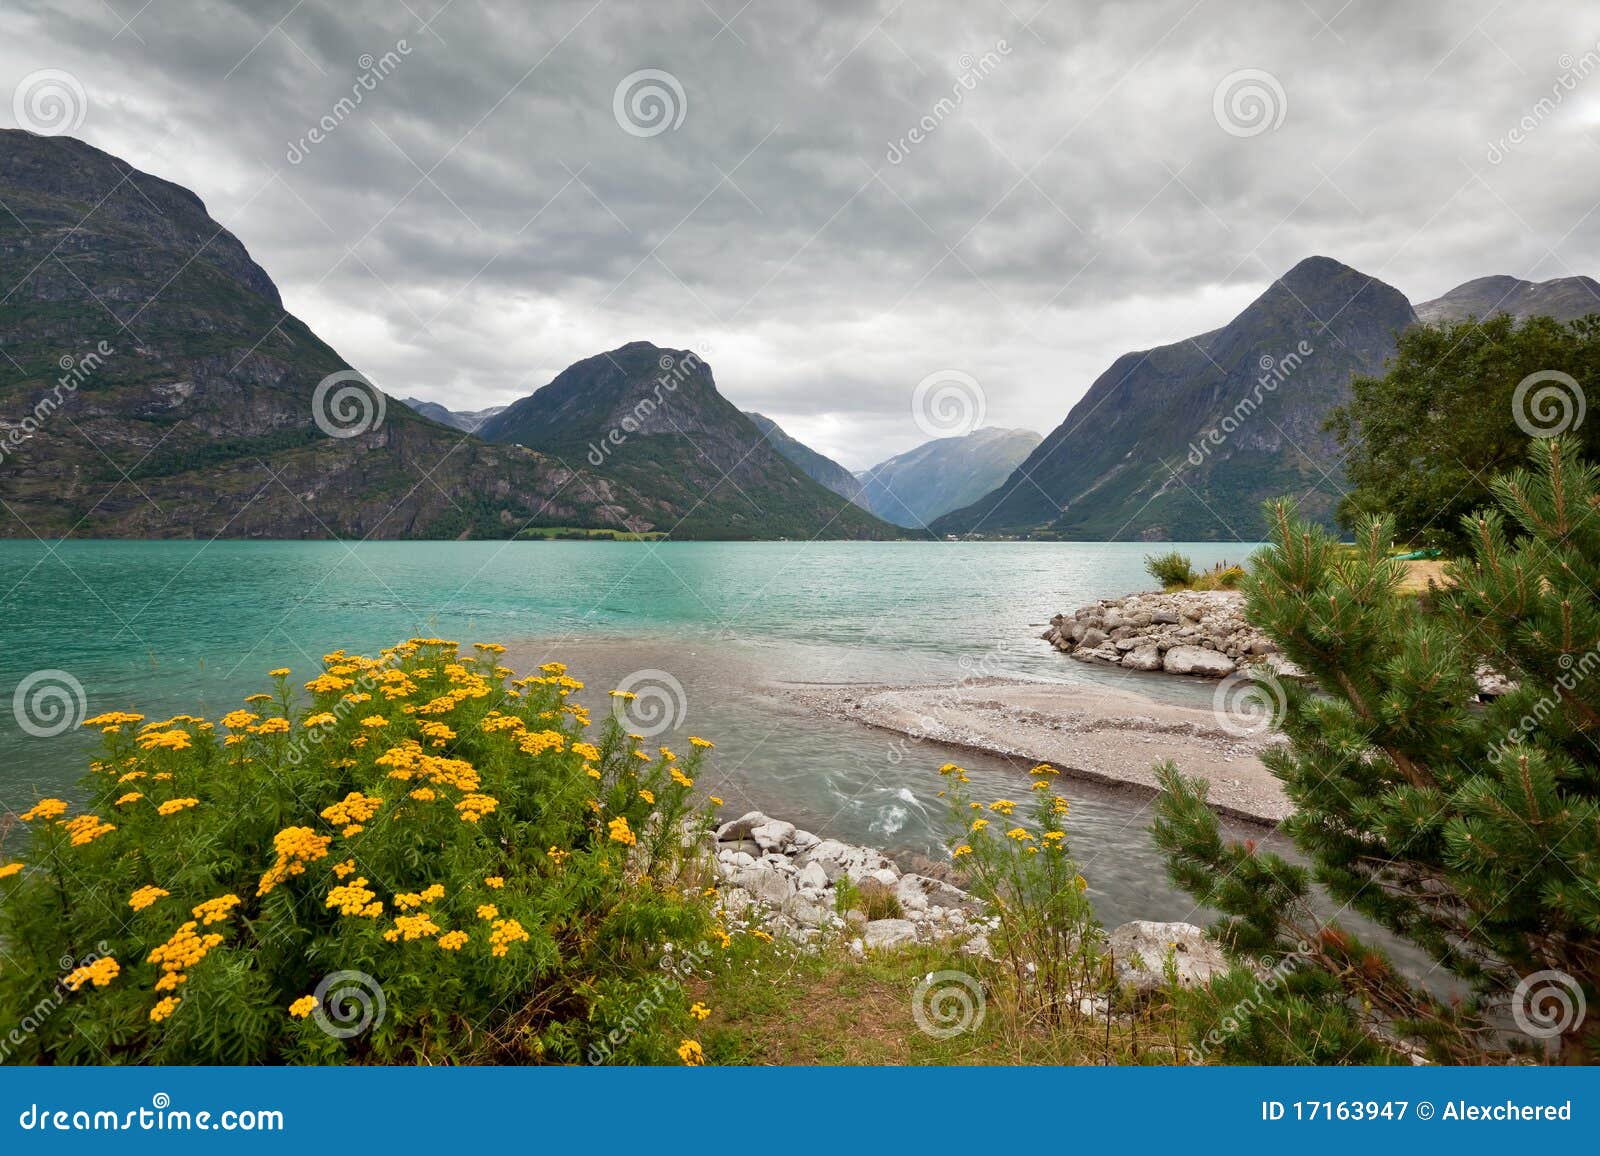 scenic view of oppstrynsvatnet lake at geirangerfjord area, hellesylt - norway - scandinavia